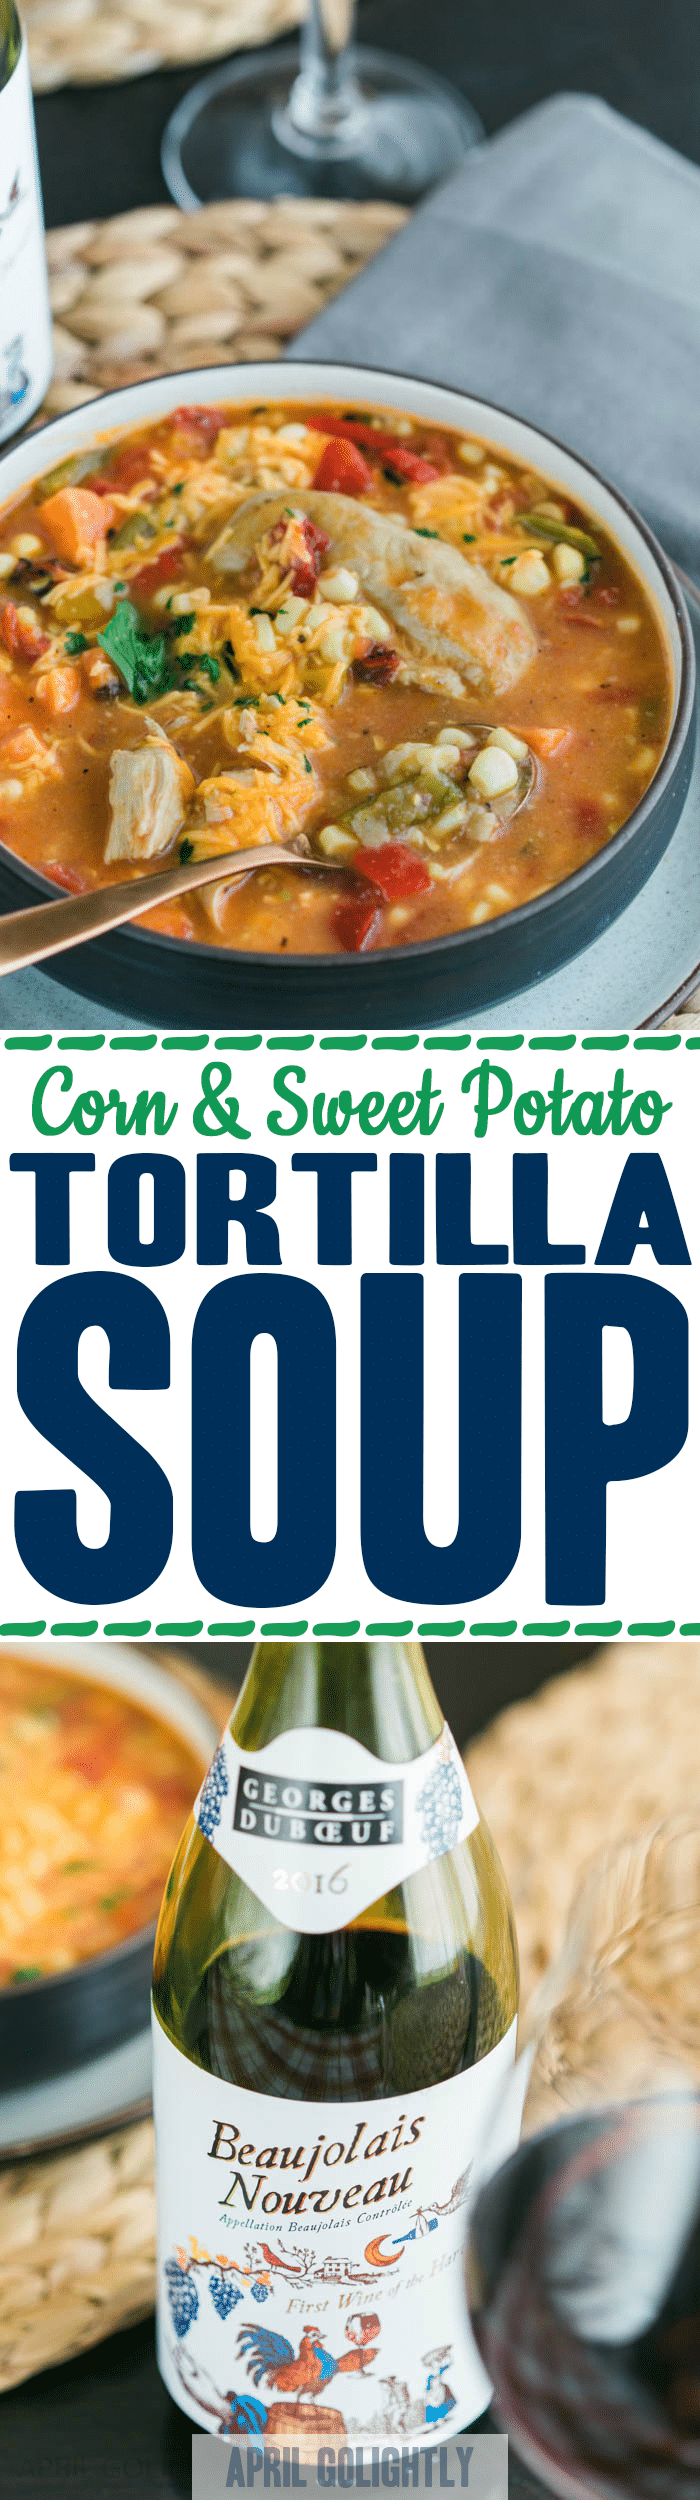 Corn & Sweet Potato Tortilla Soup Recipe with Wine Pairing 